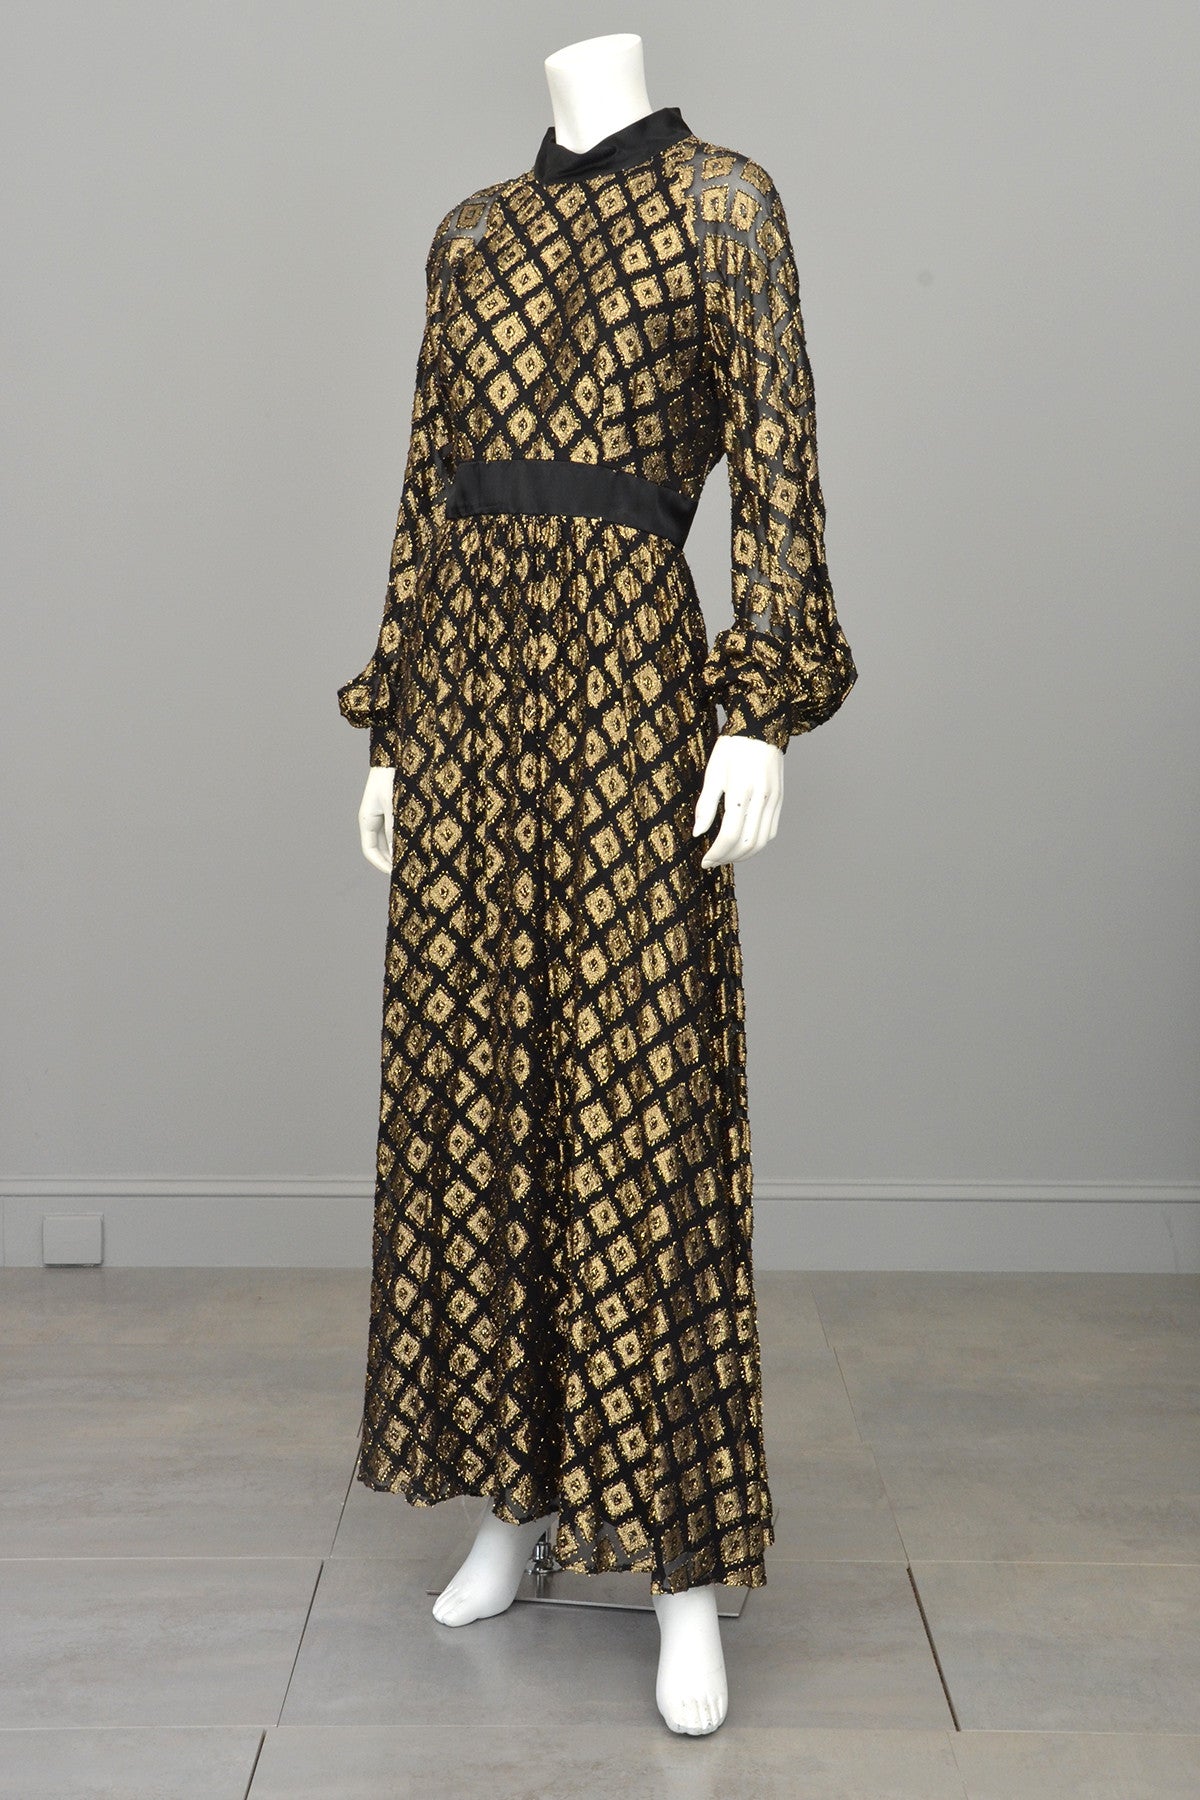 1970s Black Chiffon Gold Lamé Full Skirt Maxi Dress Gown | VintageVirtuosa